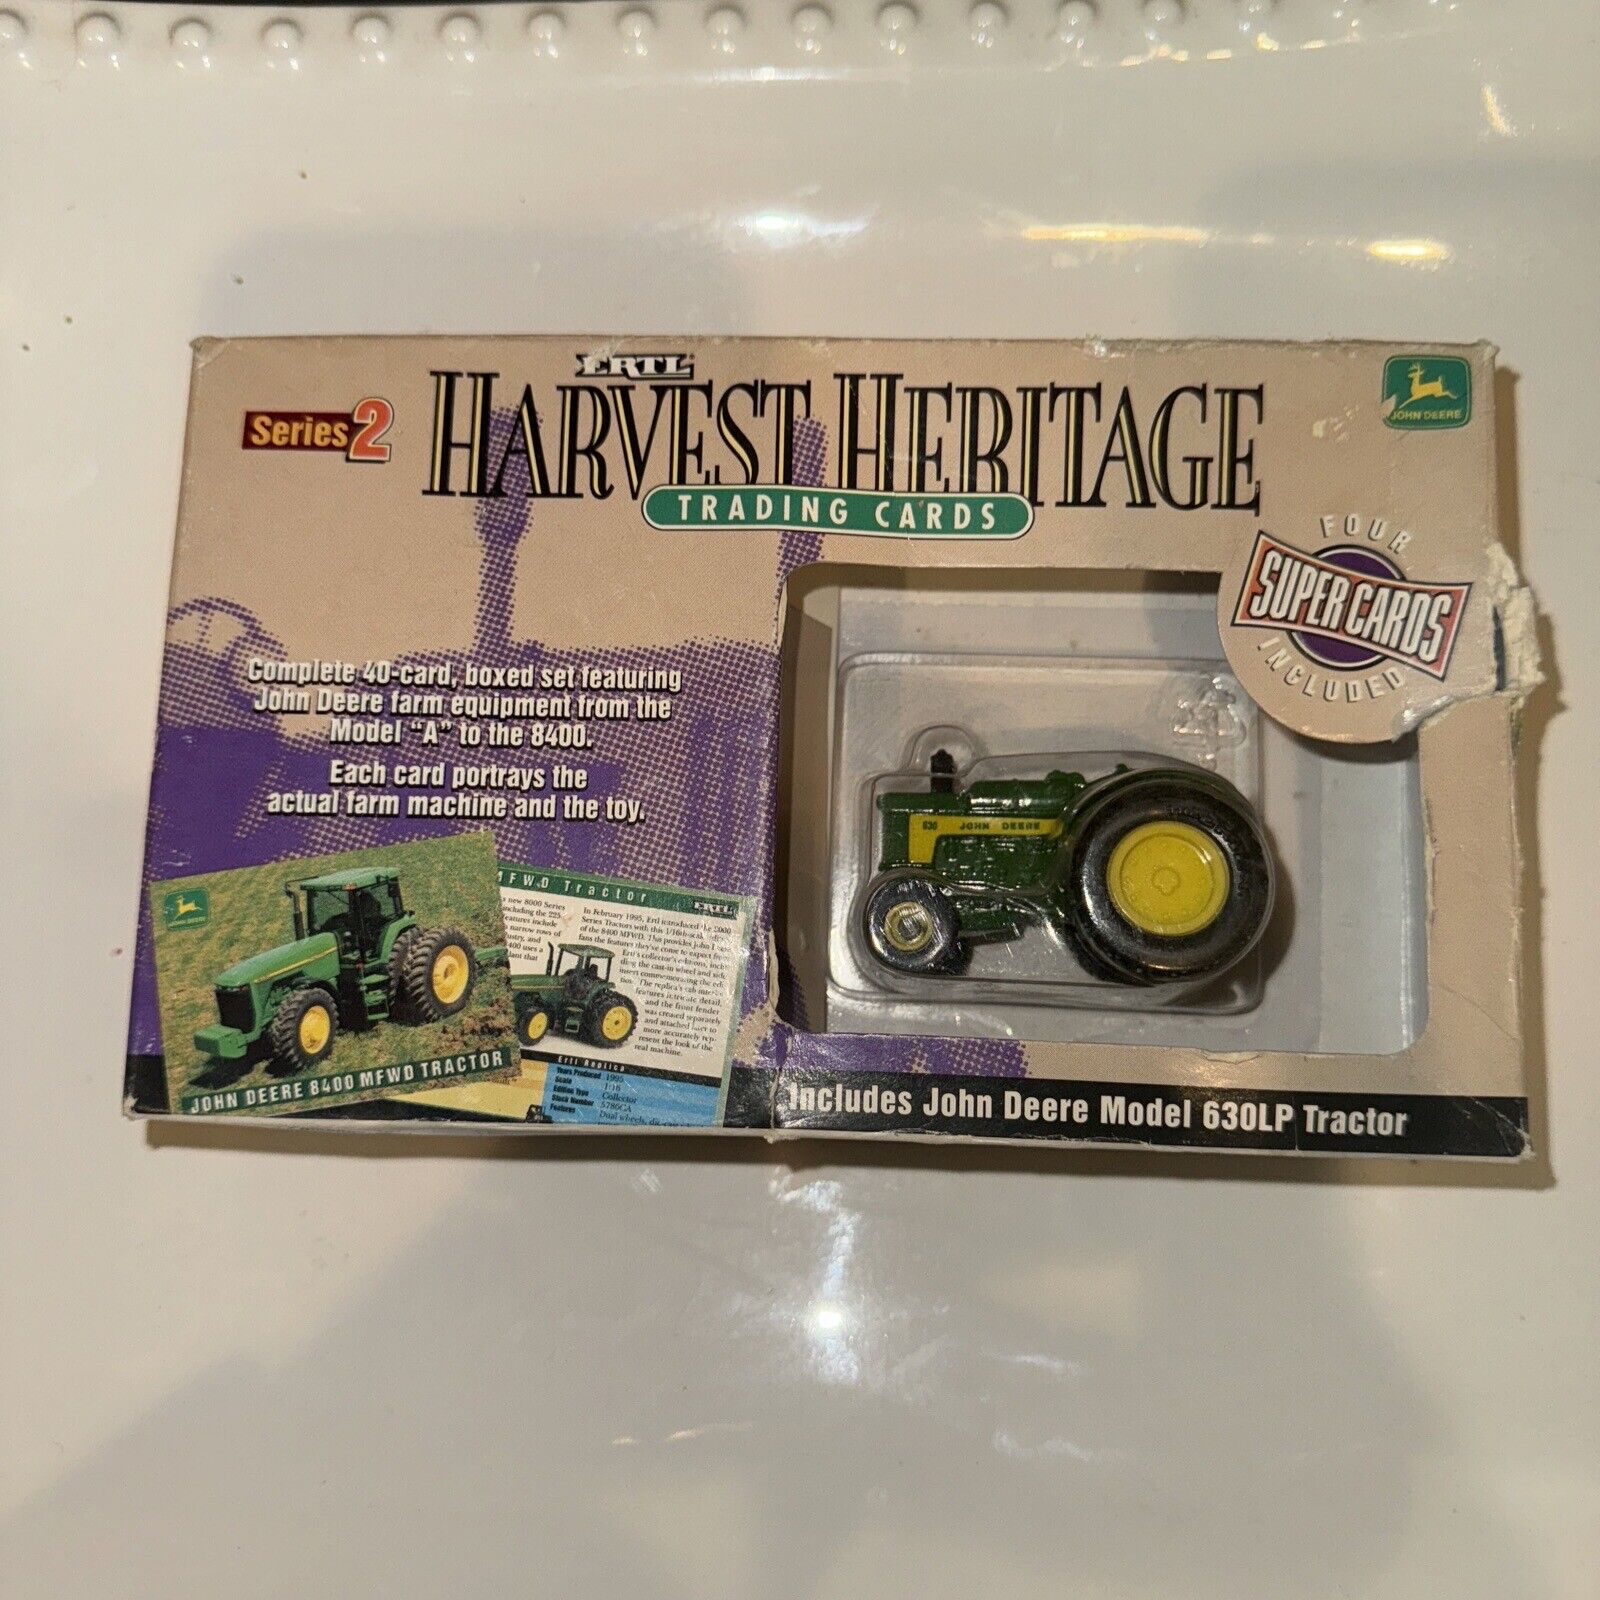 Ertl Harvest Heritage Trading Cards & John Deere Model 630LP Tractor ~ Series 2